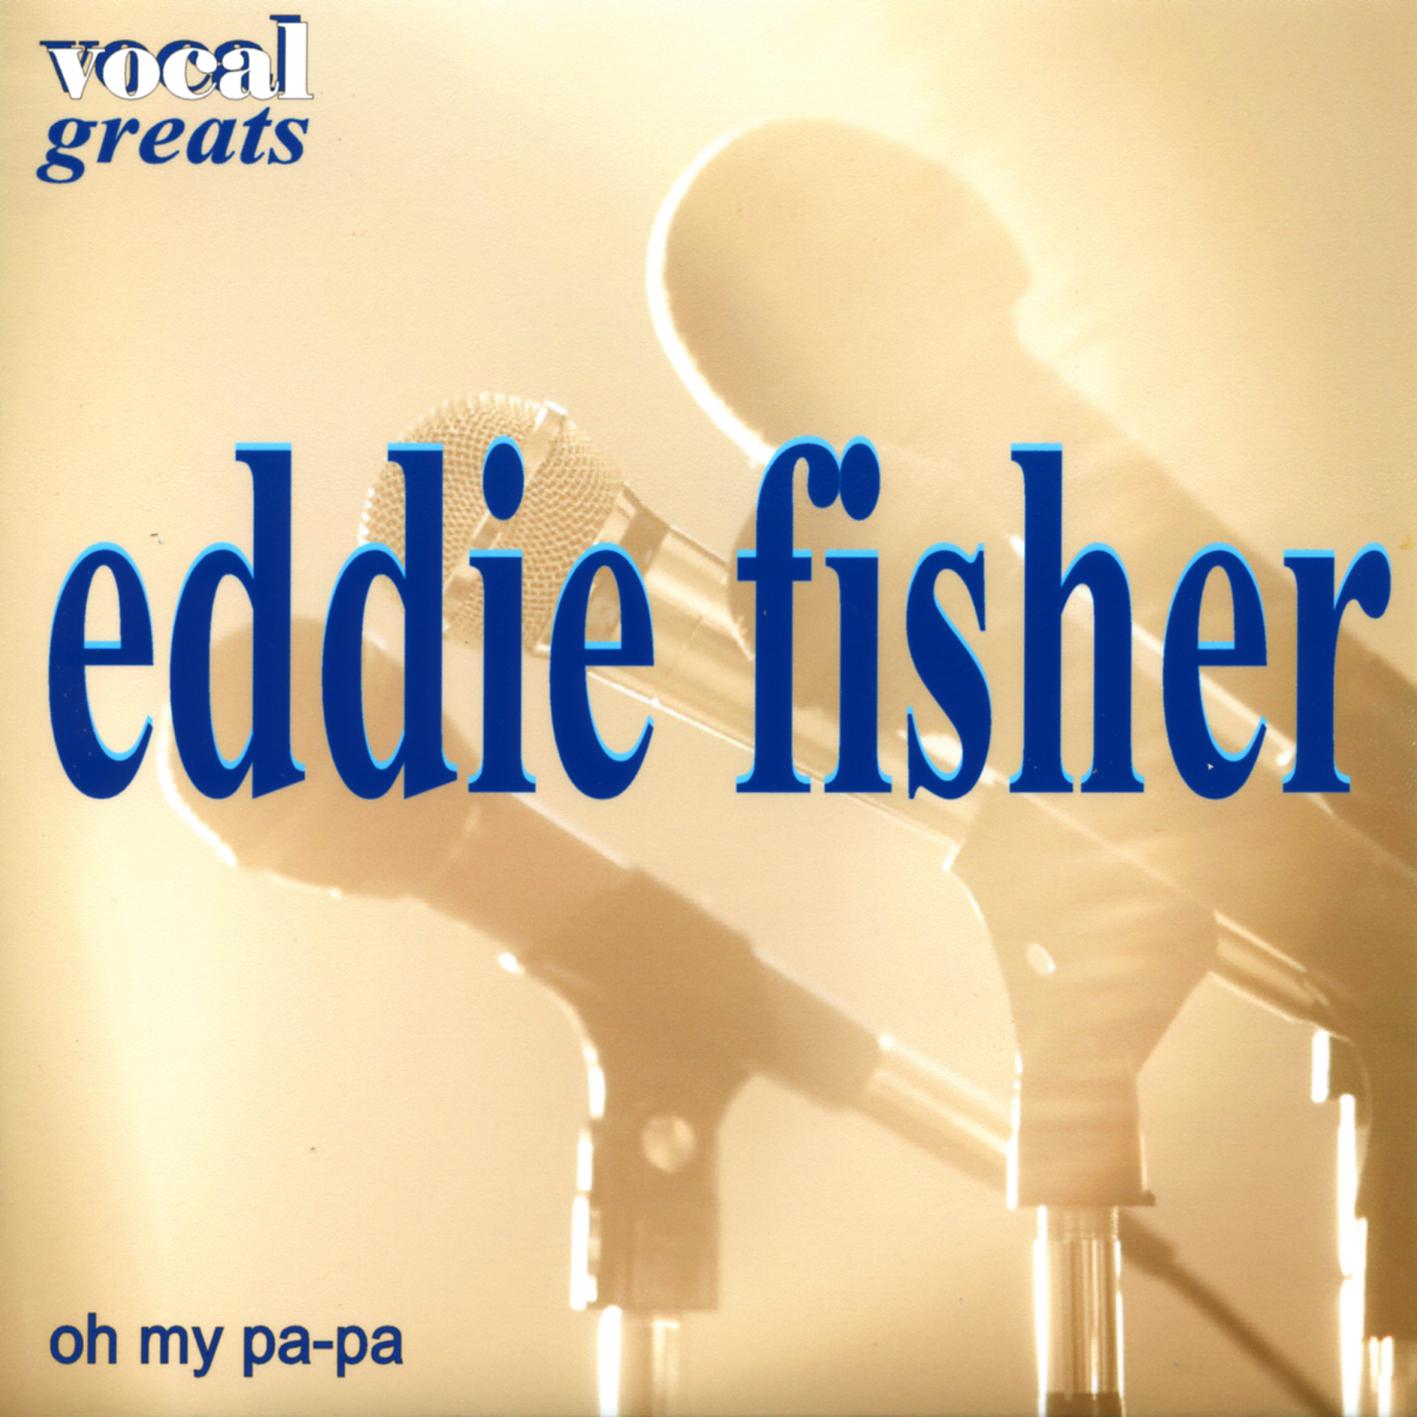 Vocal Greats - Eddie Fisher